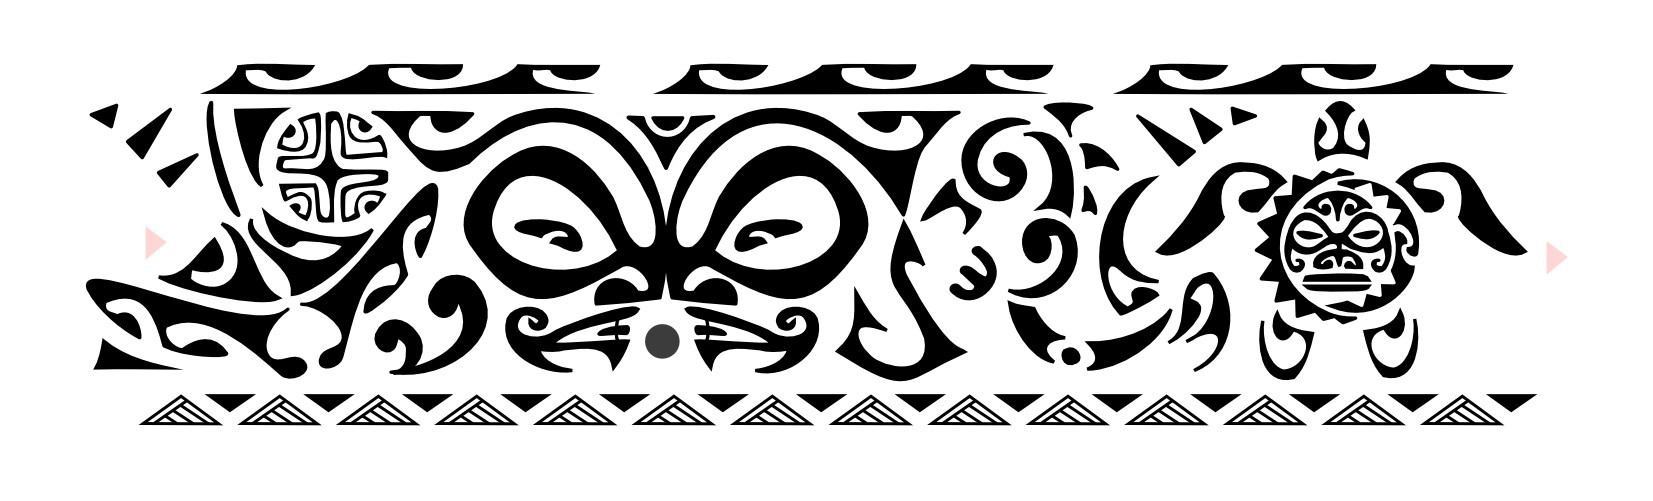 Maori Design Band Tattoo Design For Leg